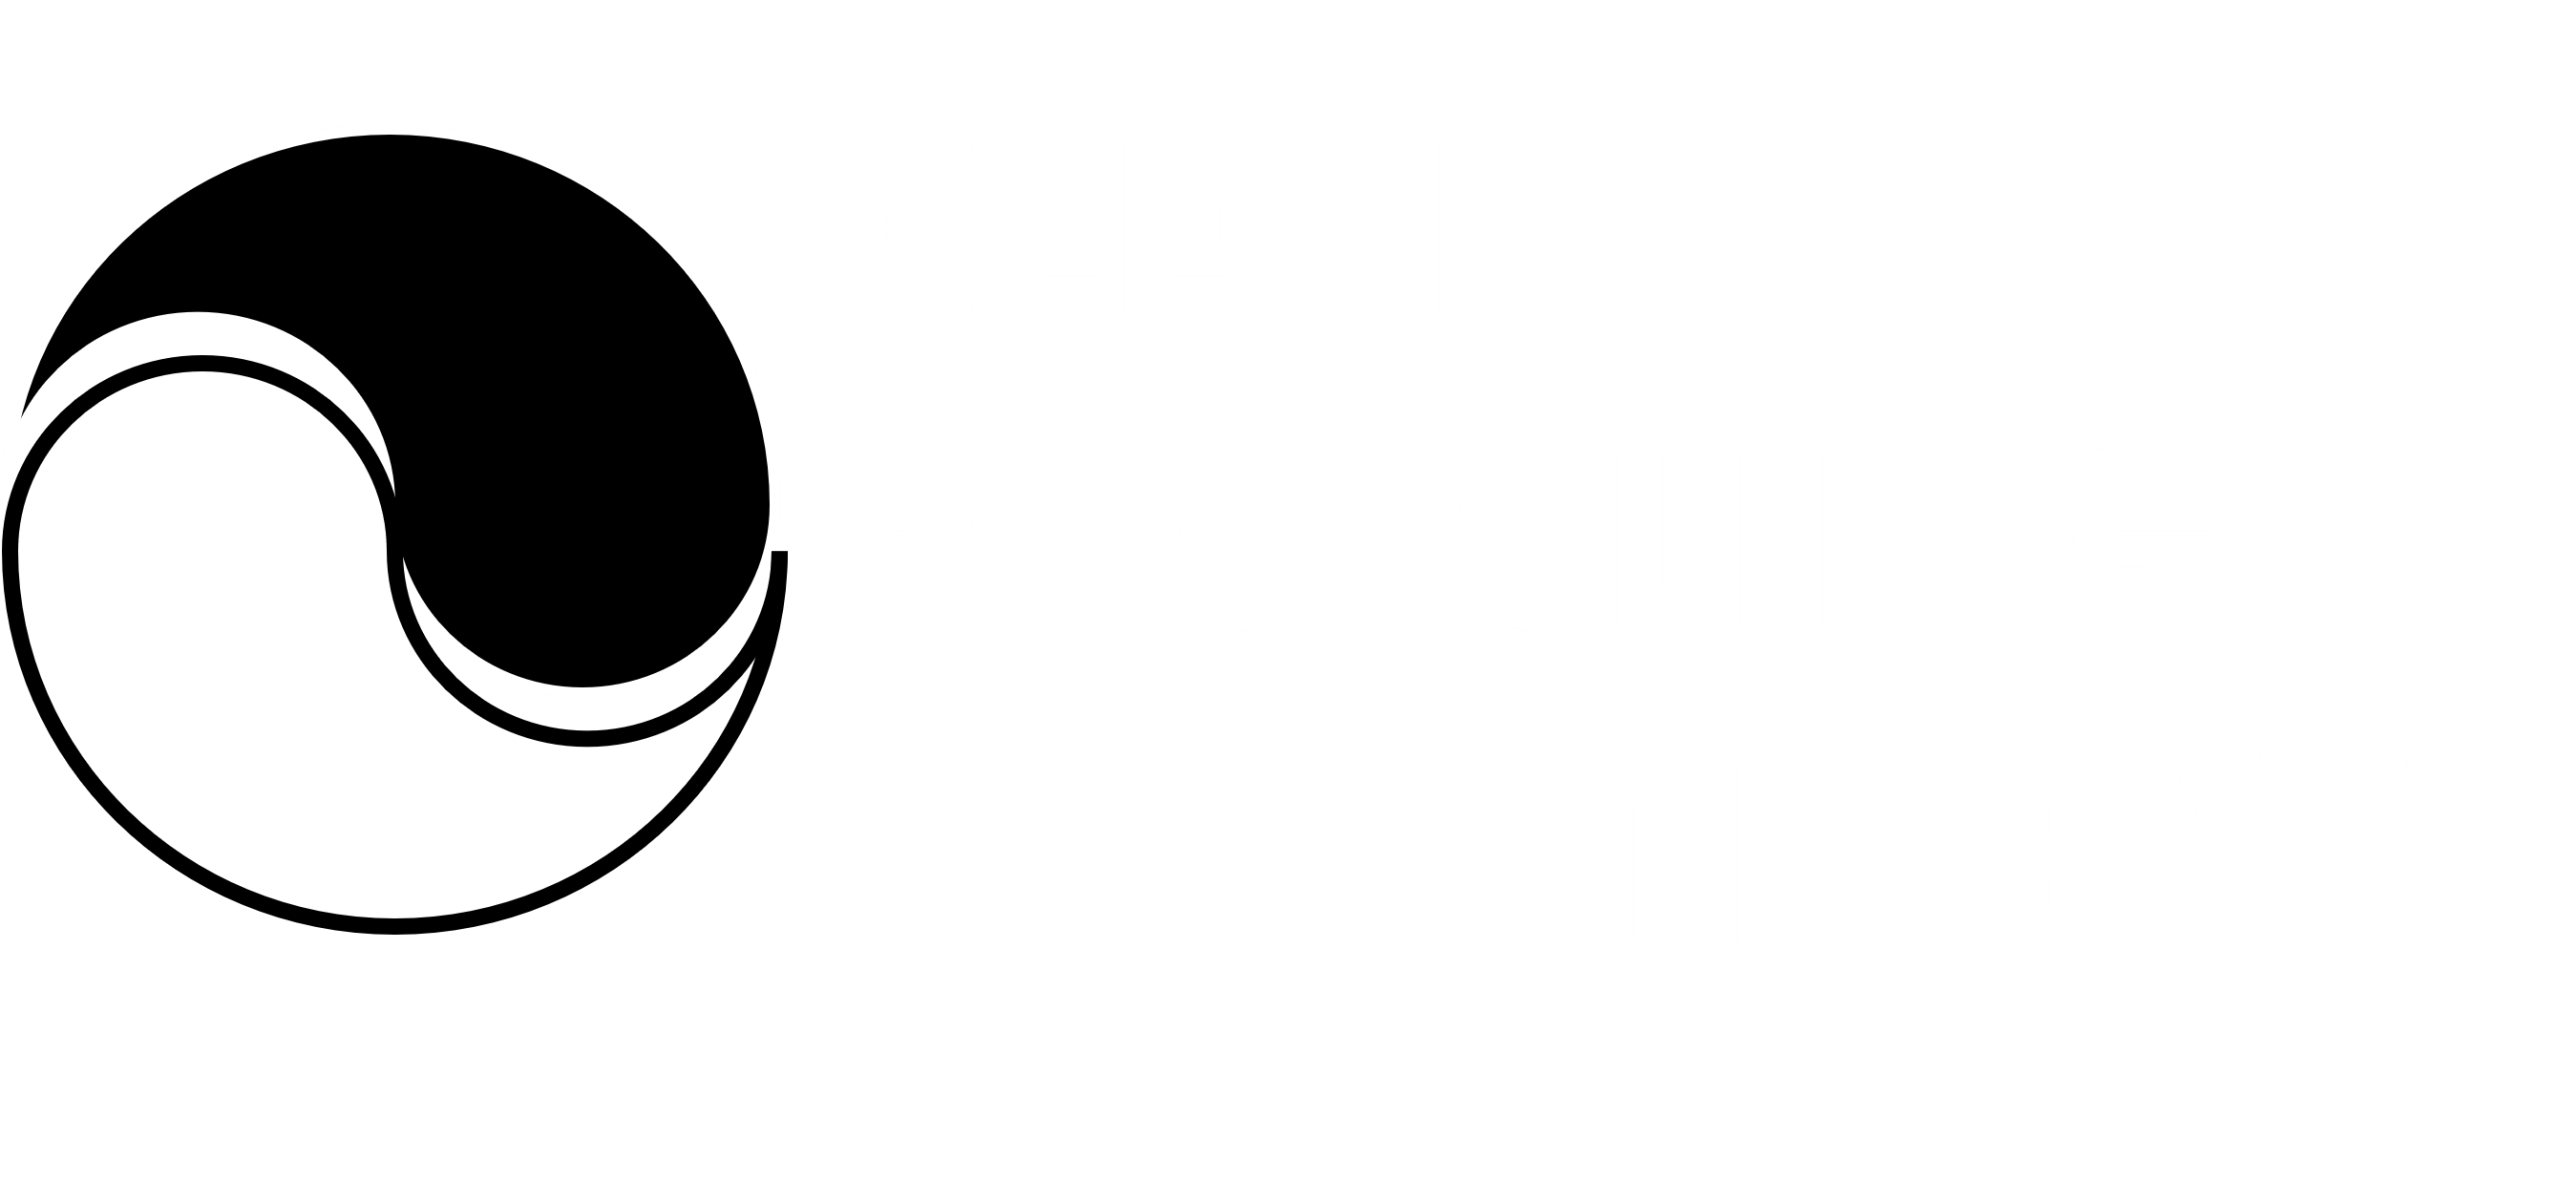 Clean Recycling Initiative logo